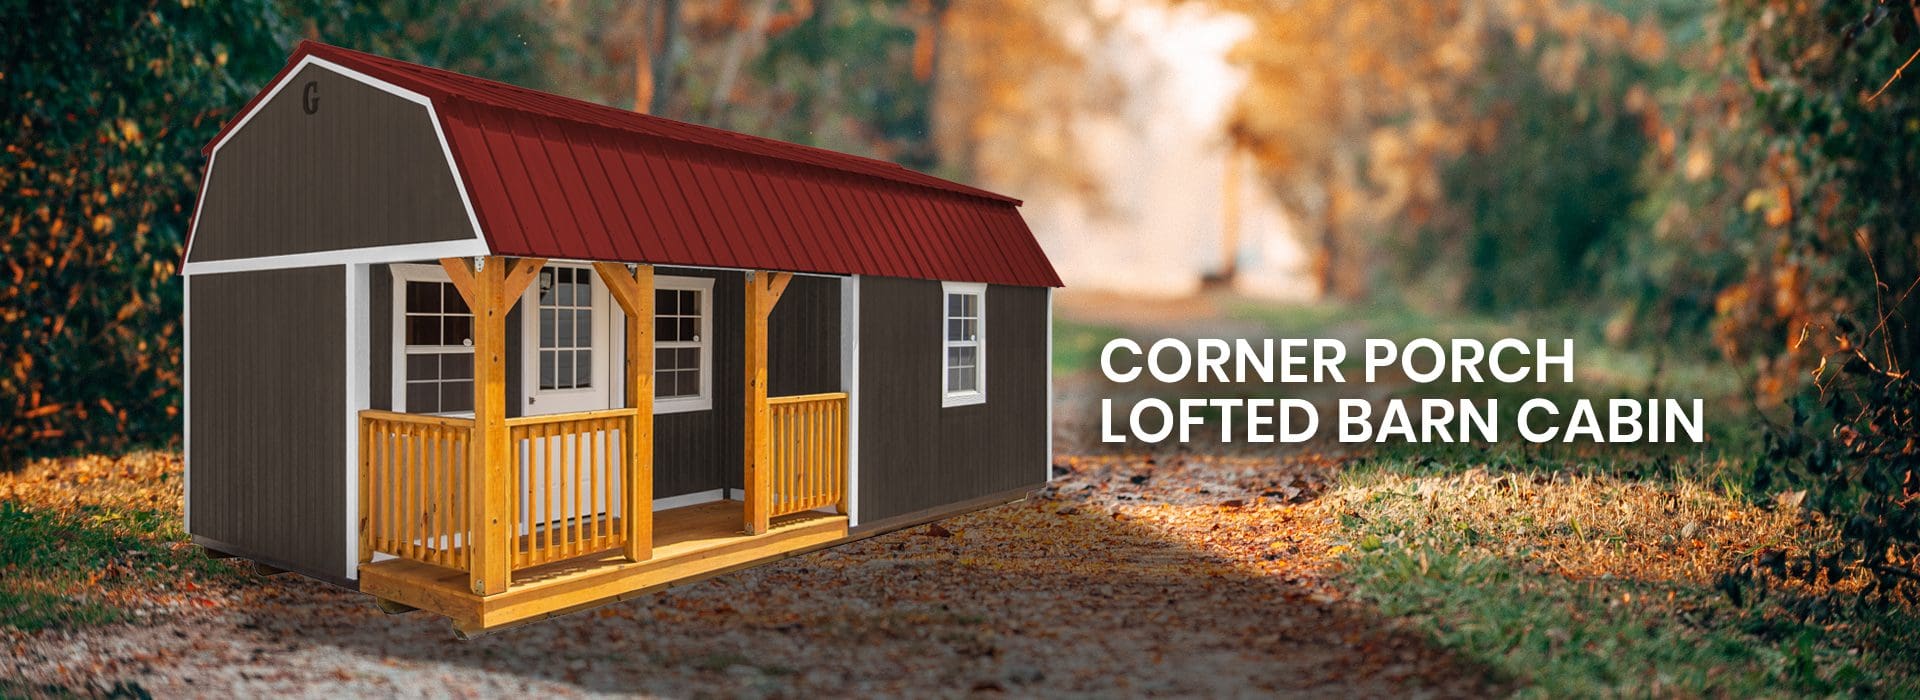 corner porch lofted barn cabin